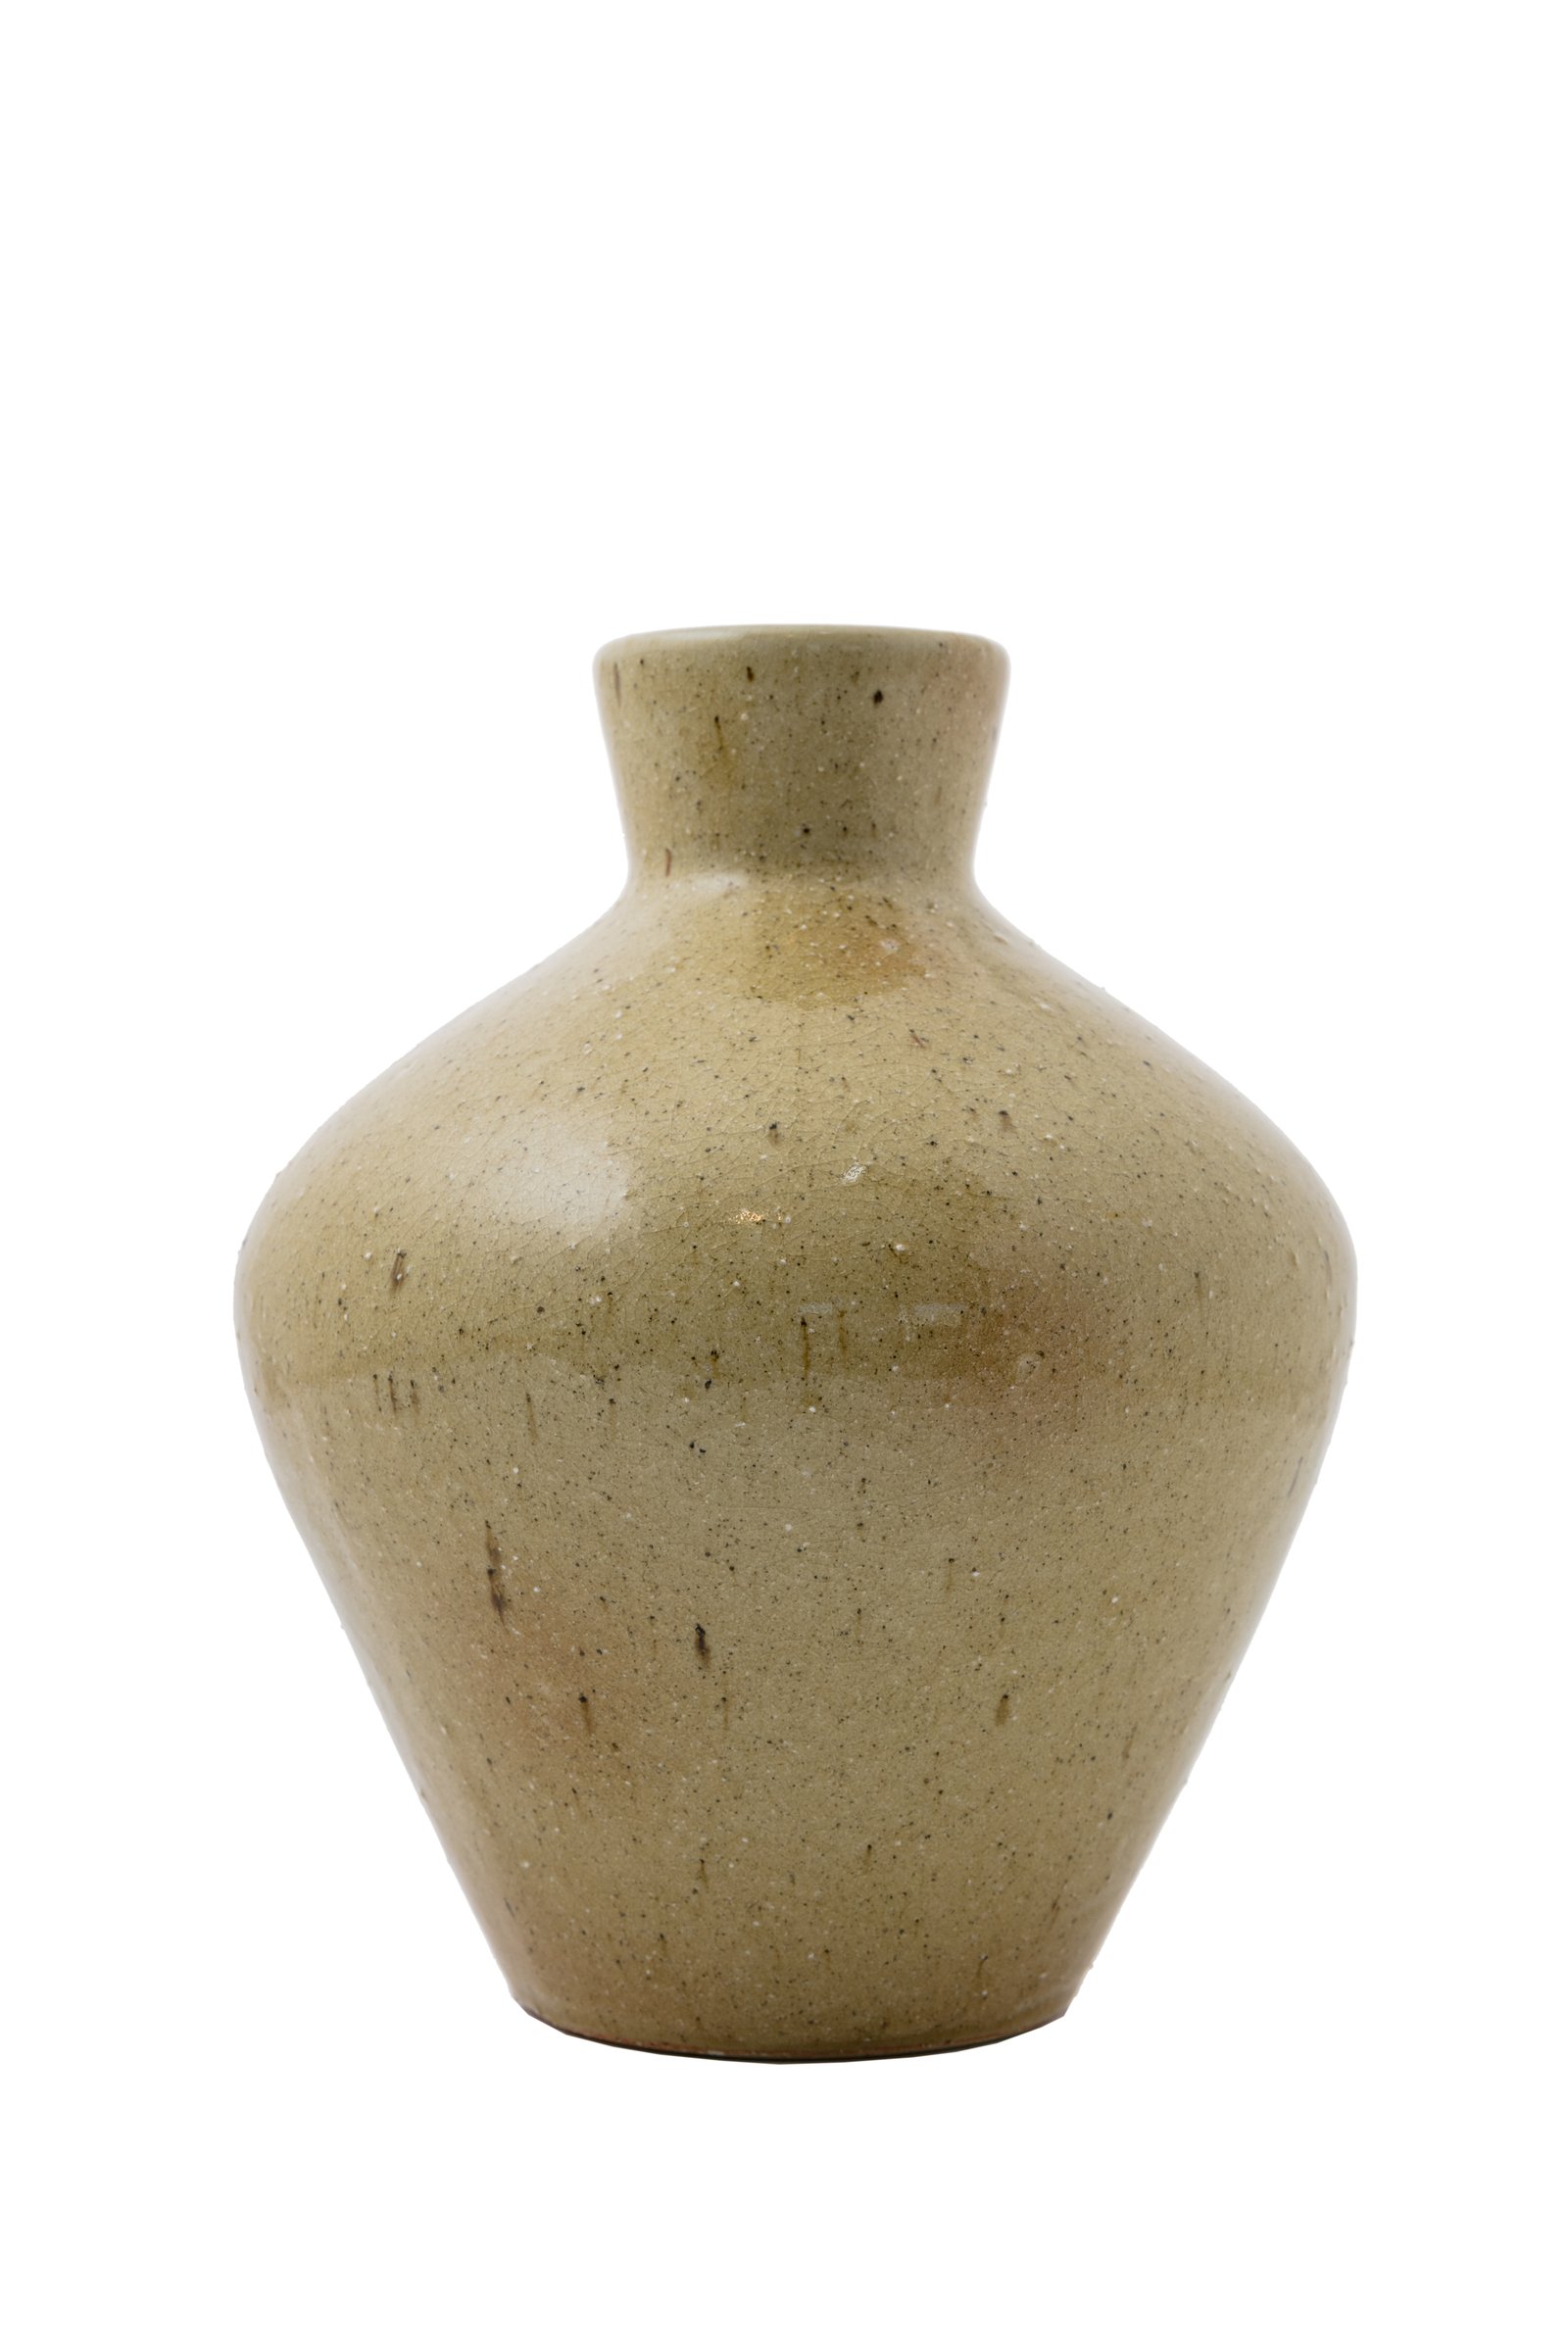 Stoneware glazed vase